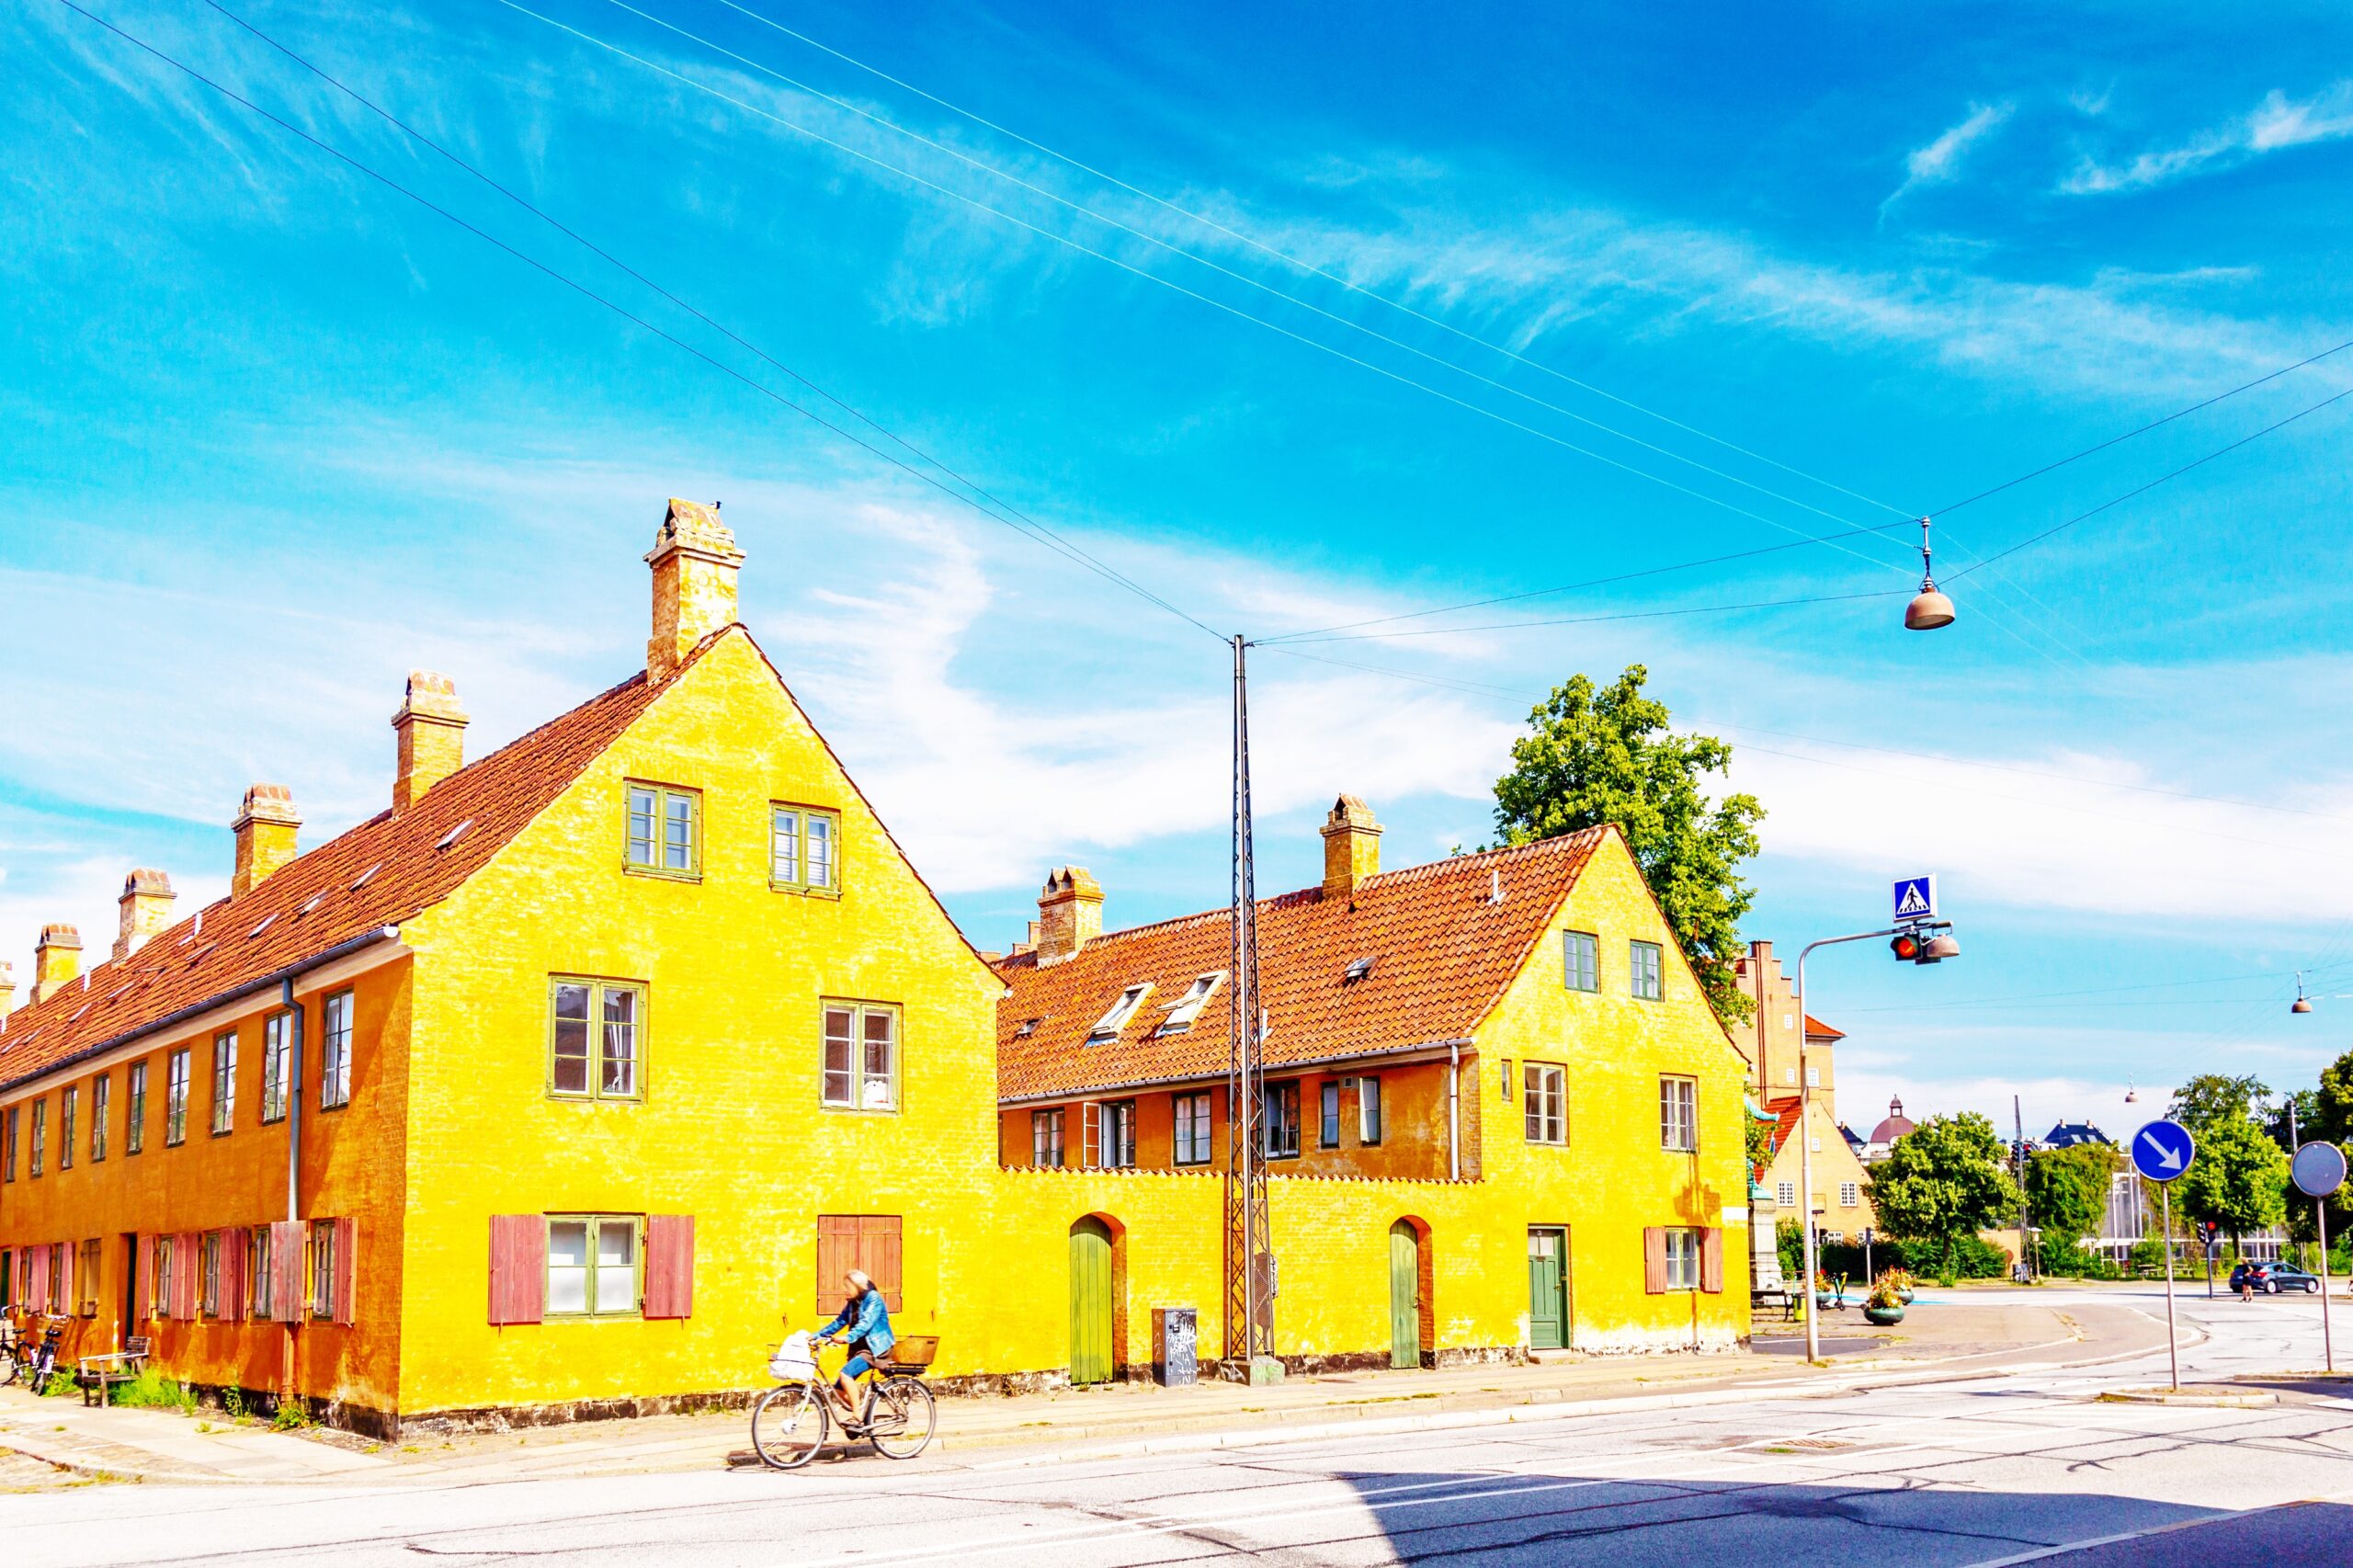 <img src="yellow.jpg" alt="yellow houses in Denmark Copenhagen"/>